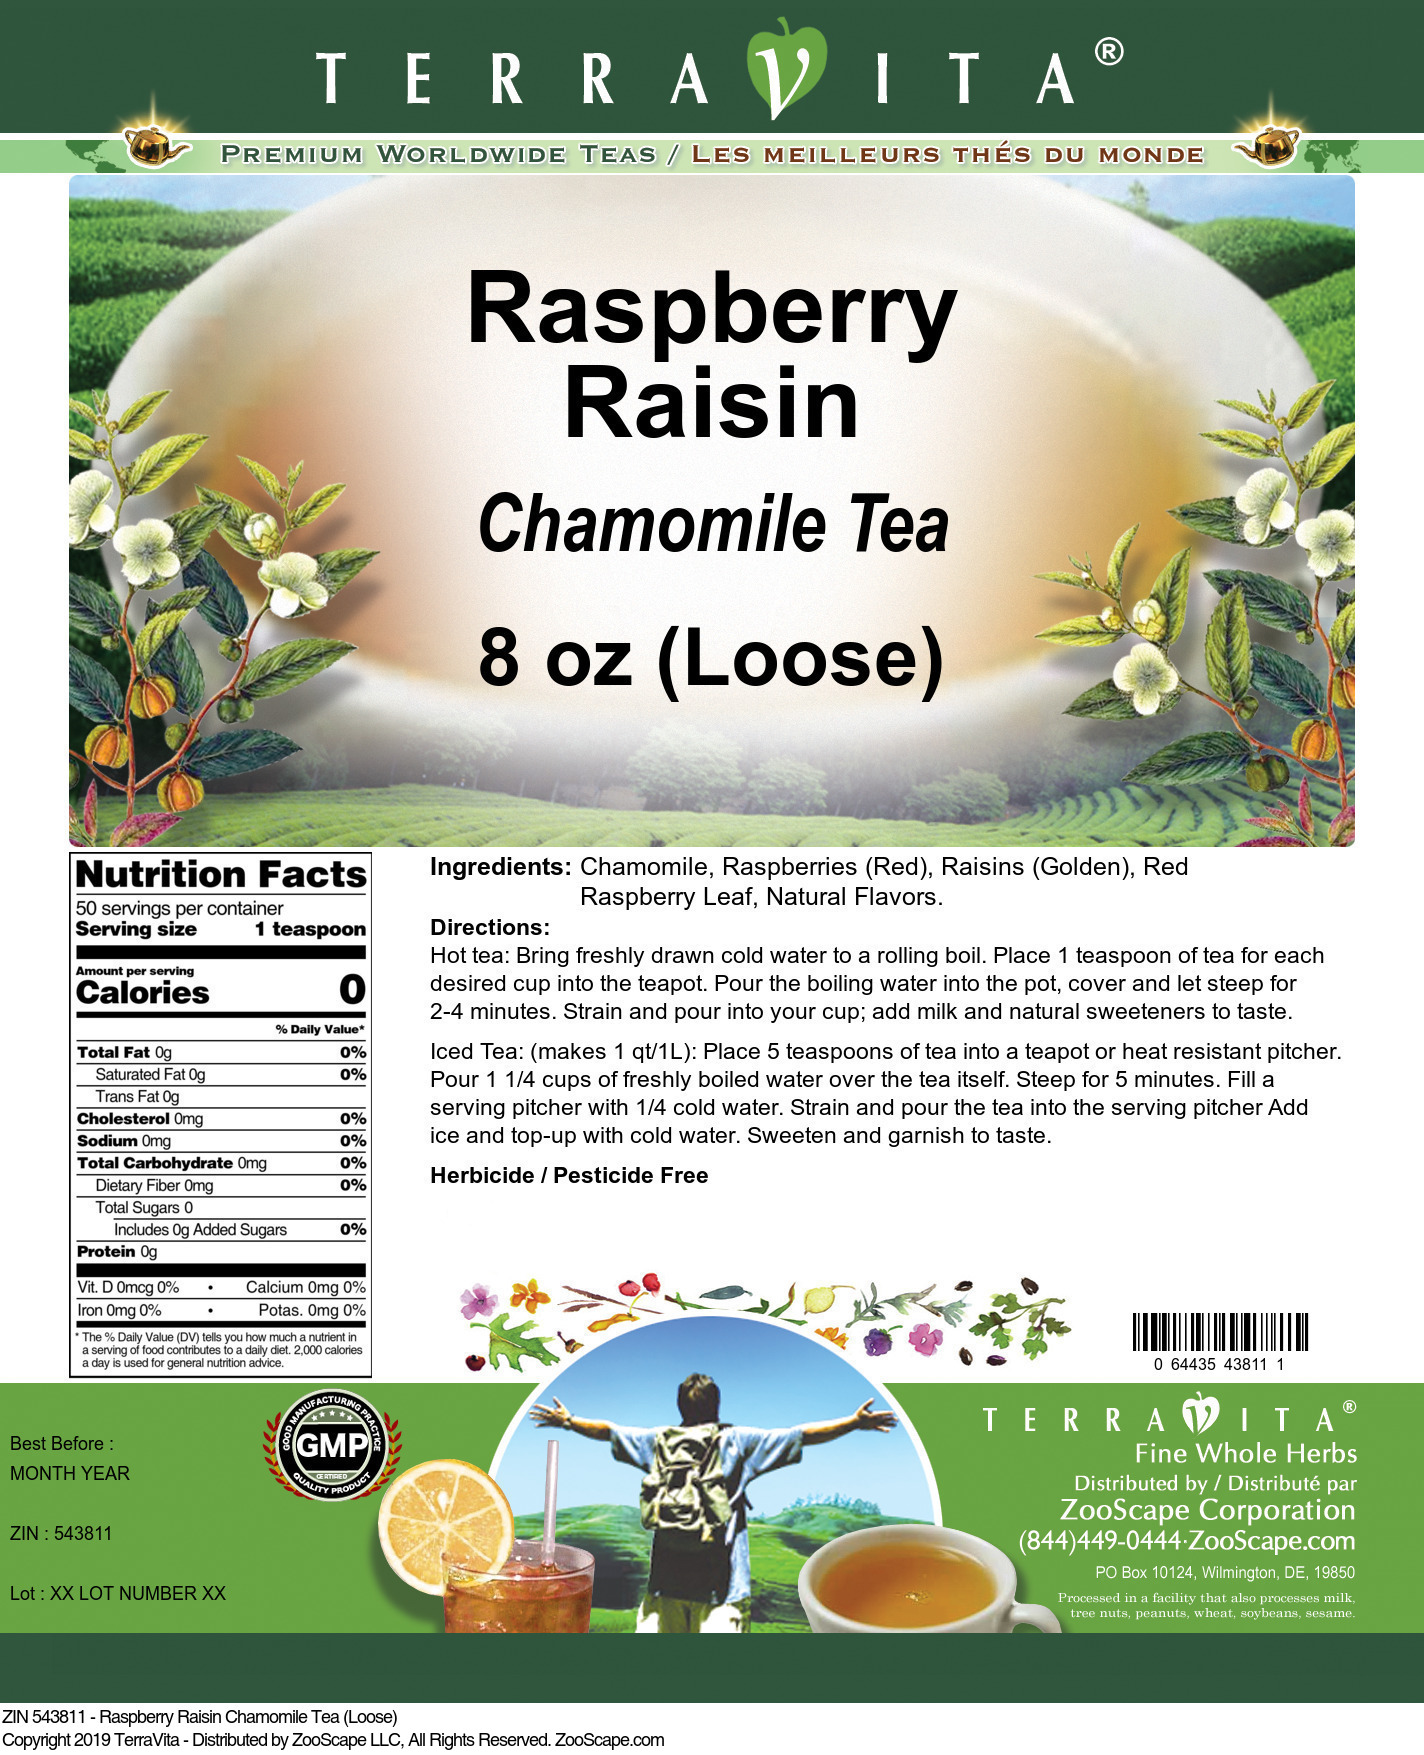 Raspberry Raisin Chamomile Tea (Loose) - Label